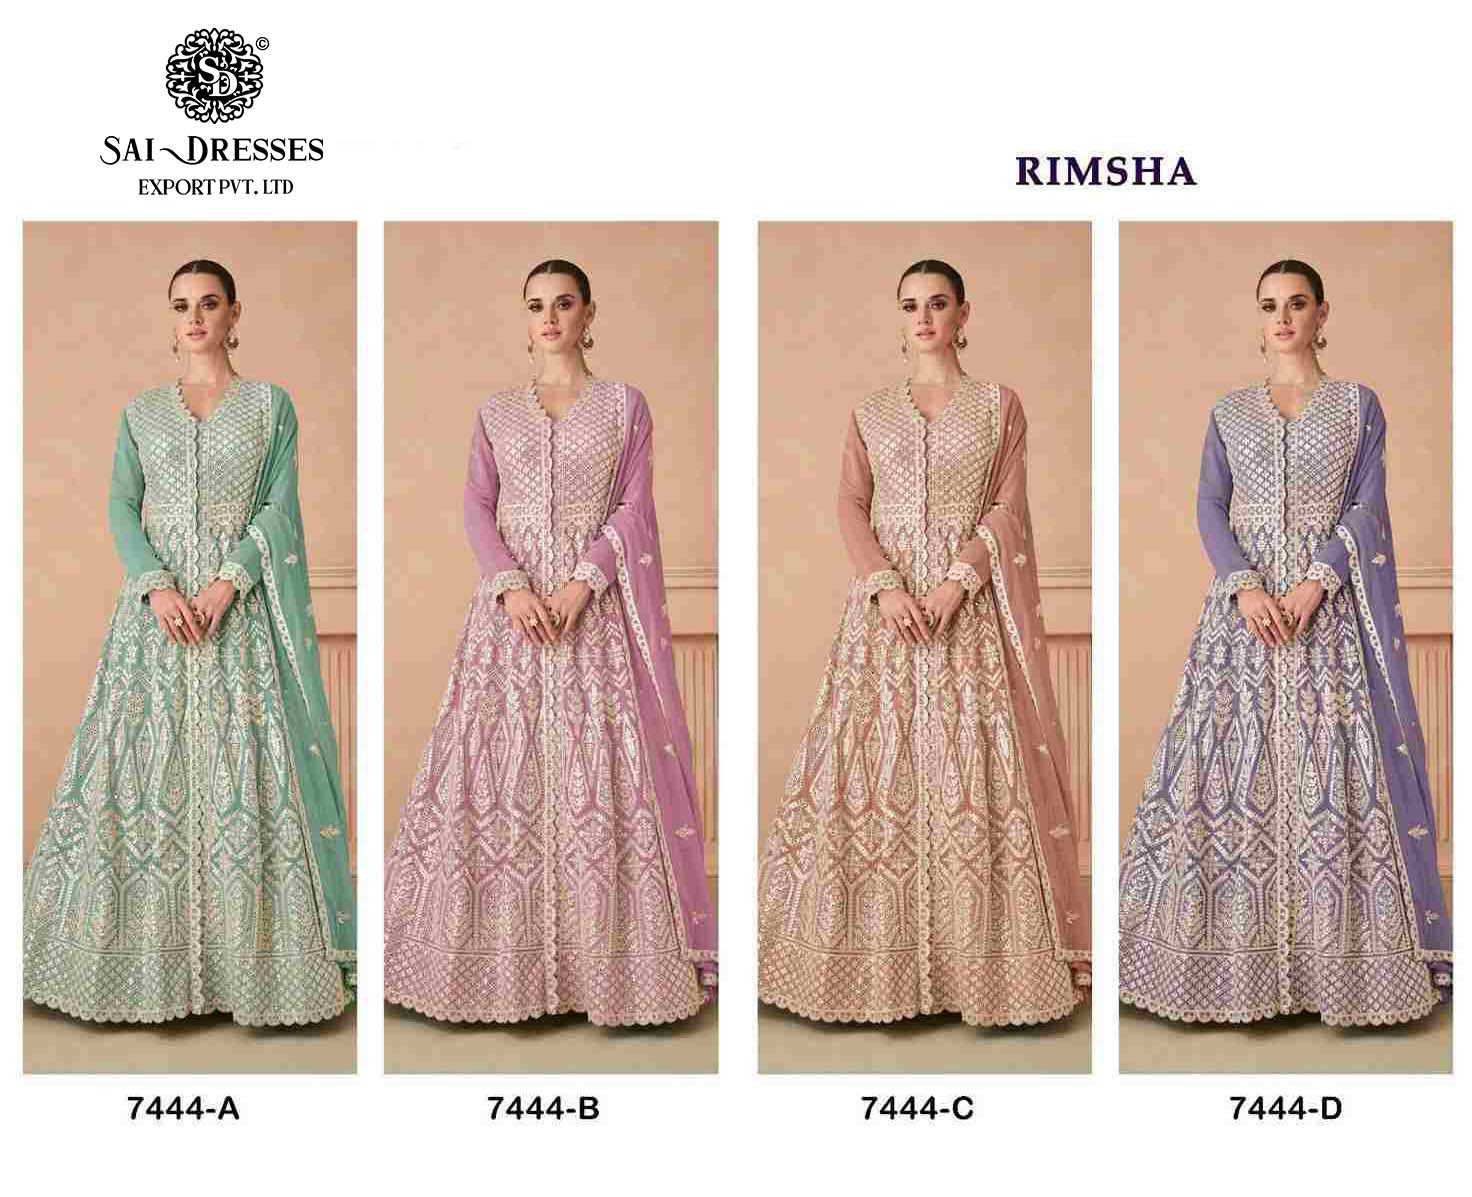 RIMSHA NX PAKISTANI DRESS MATERIAL IN WHOLESALE RATE IN SURAT 